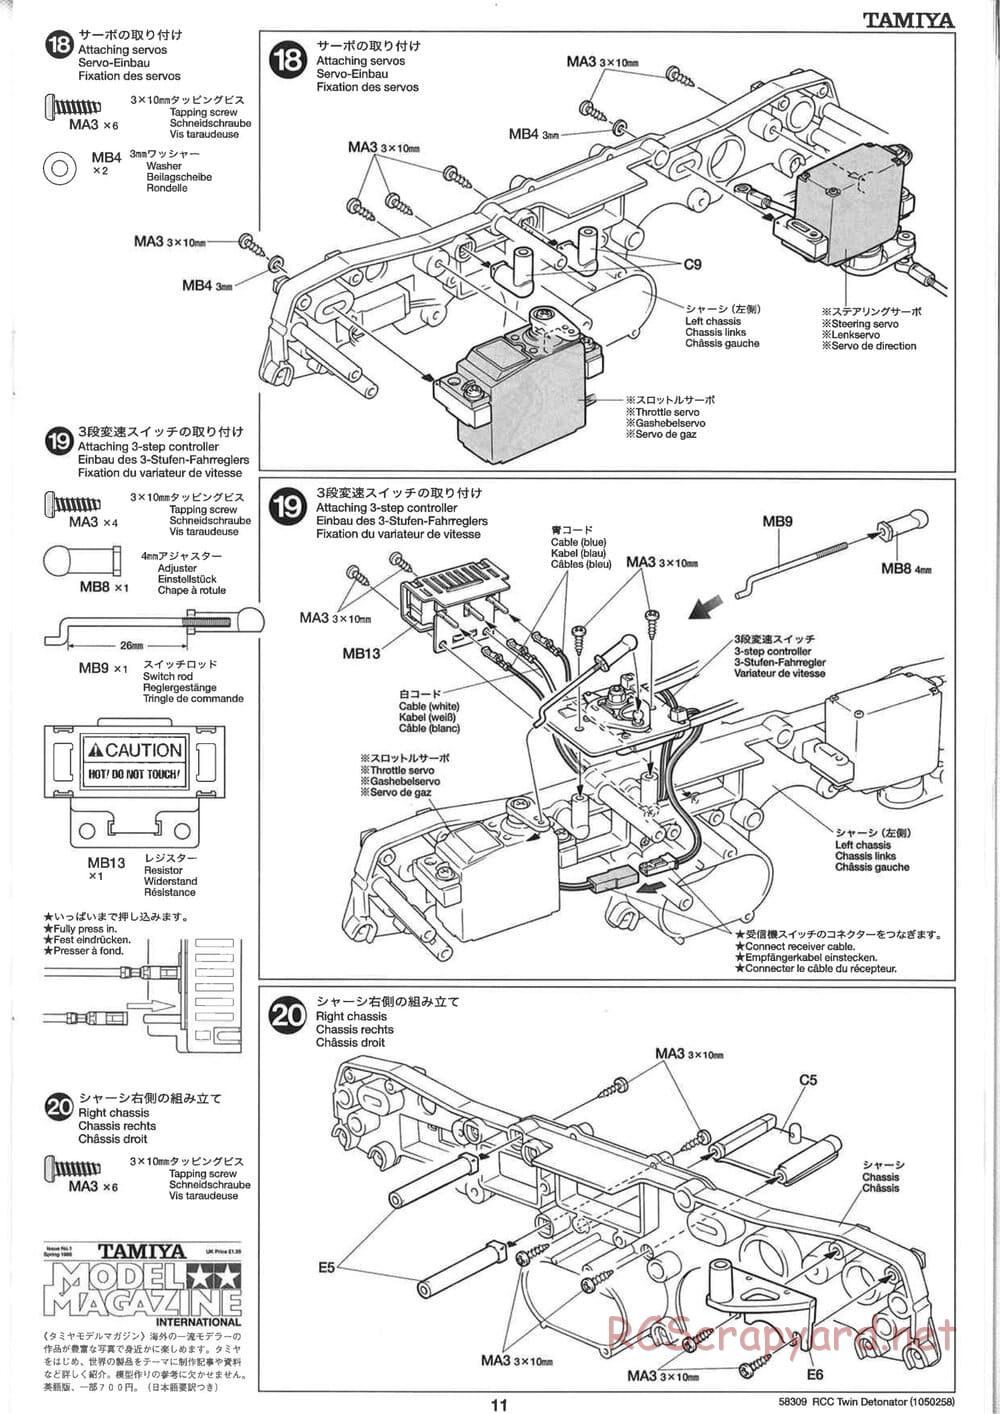 Tamiya - Twin Detonator - WR-01 Chassis - Manual - Page 11